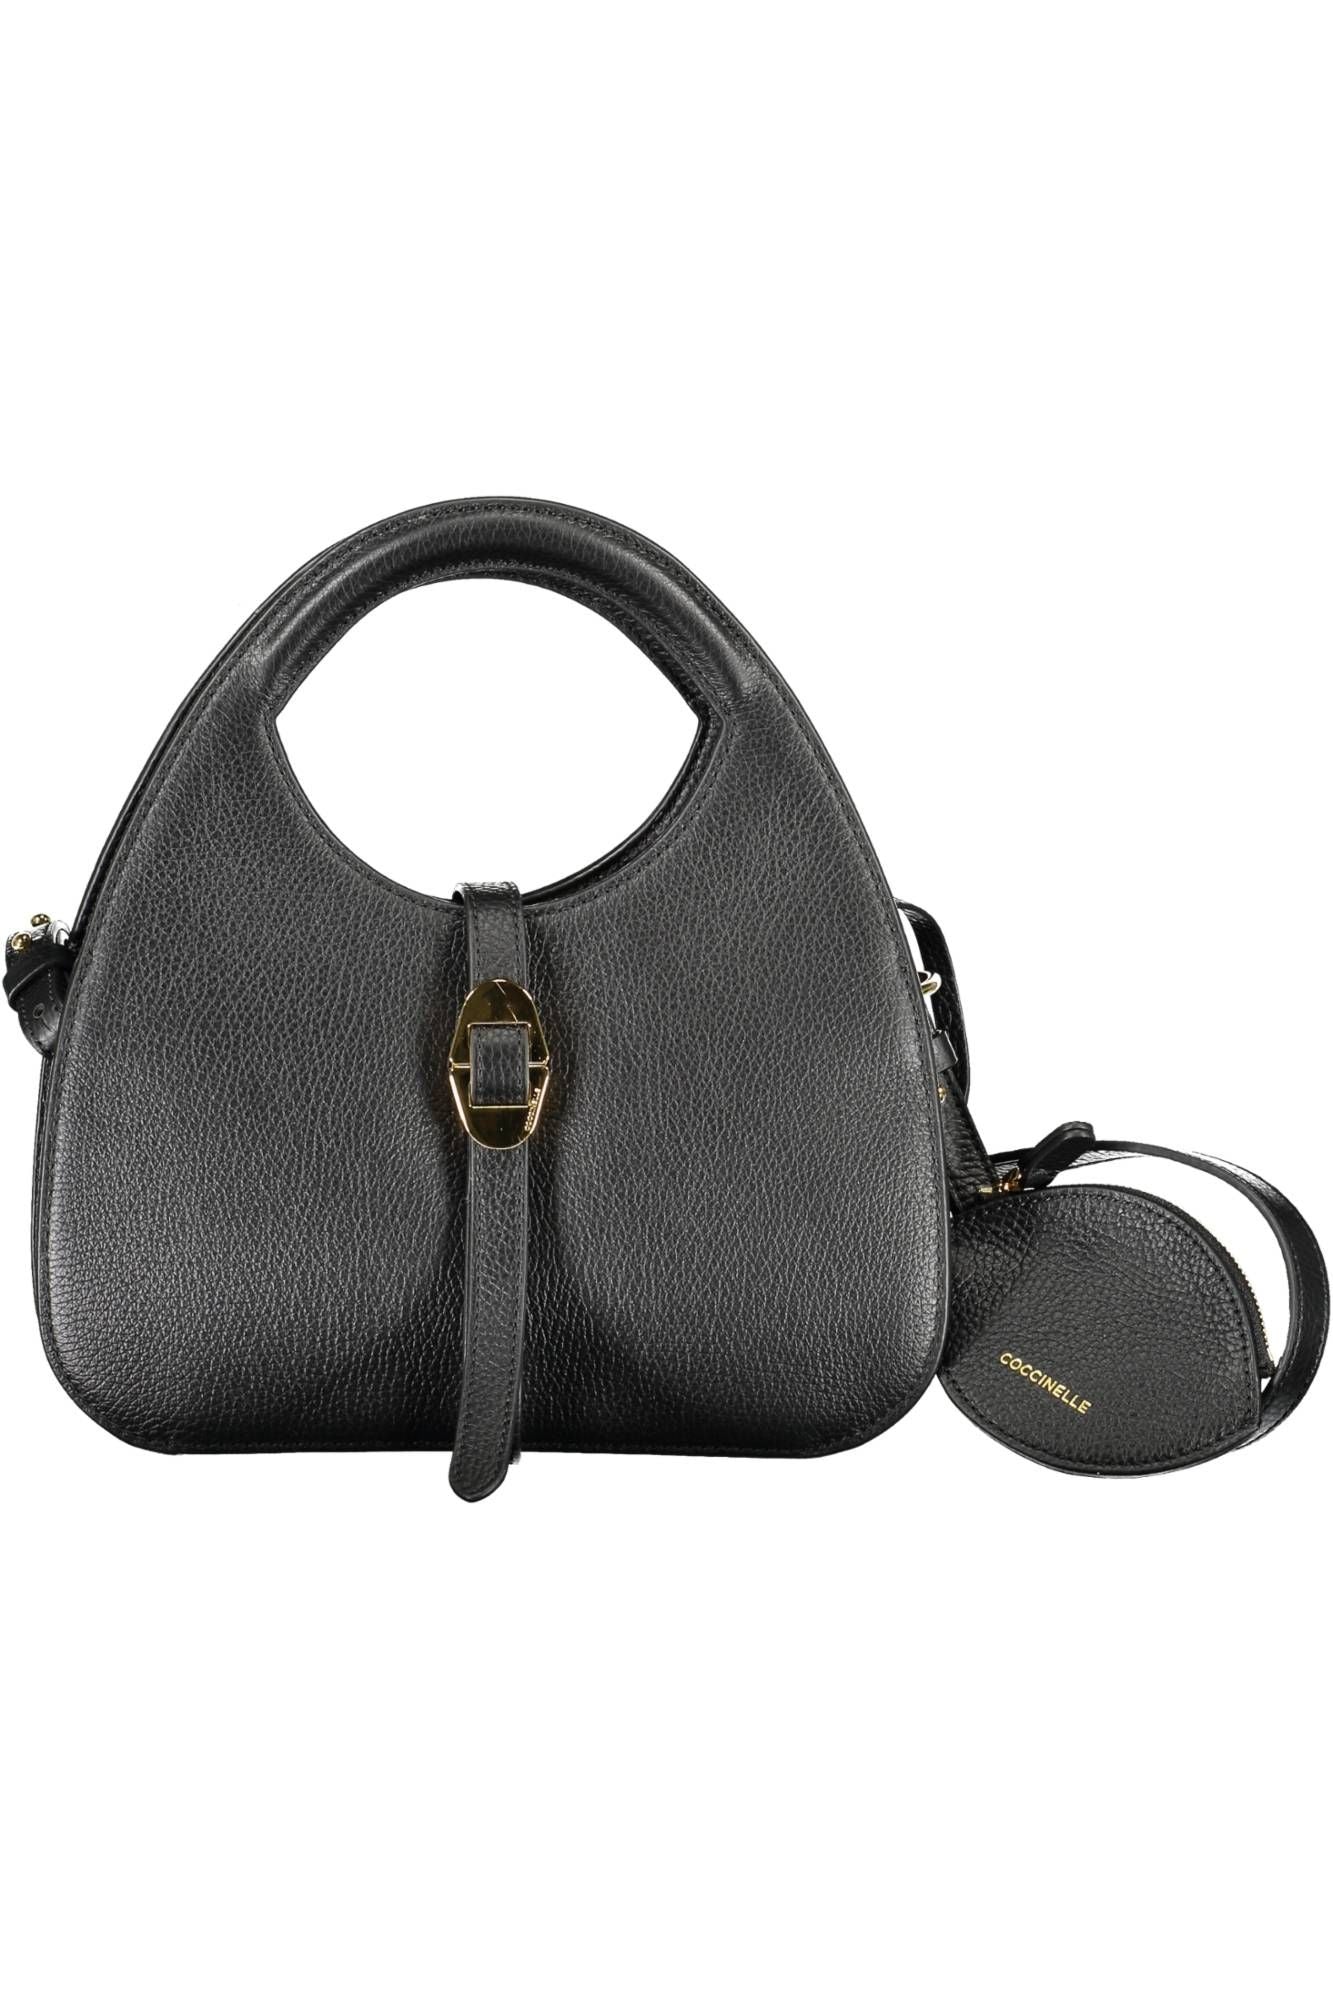 Coccinelle Elegant Duo-Compartment Leather Handbag